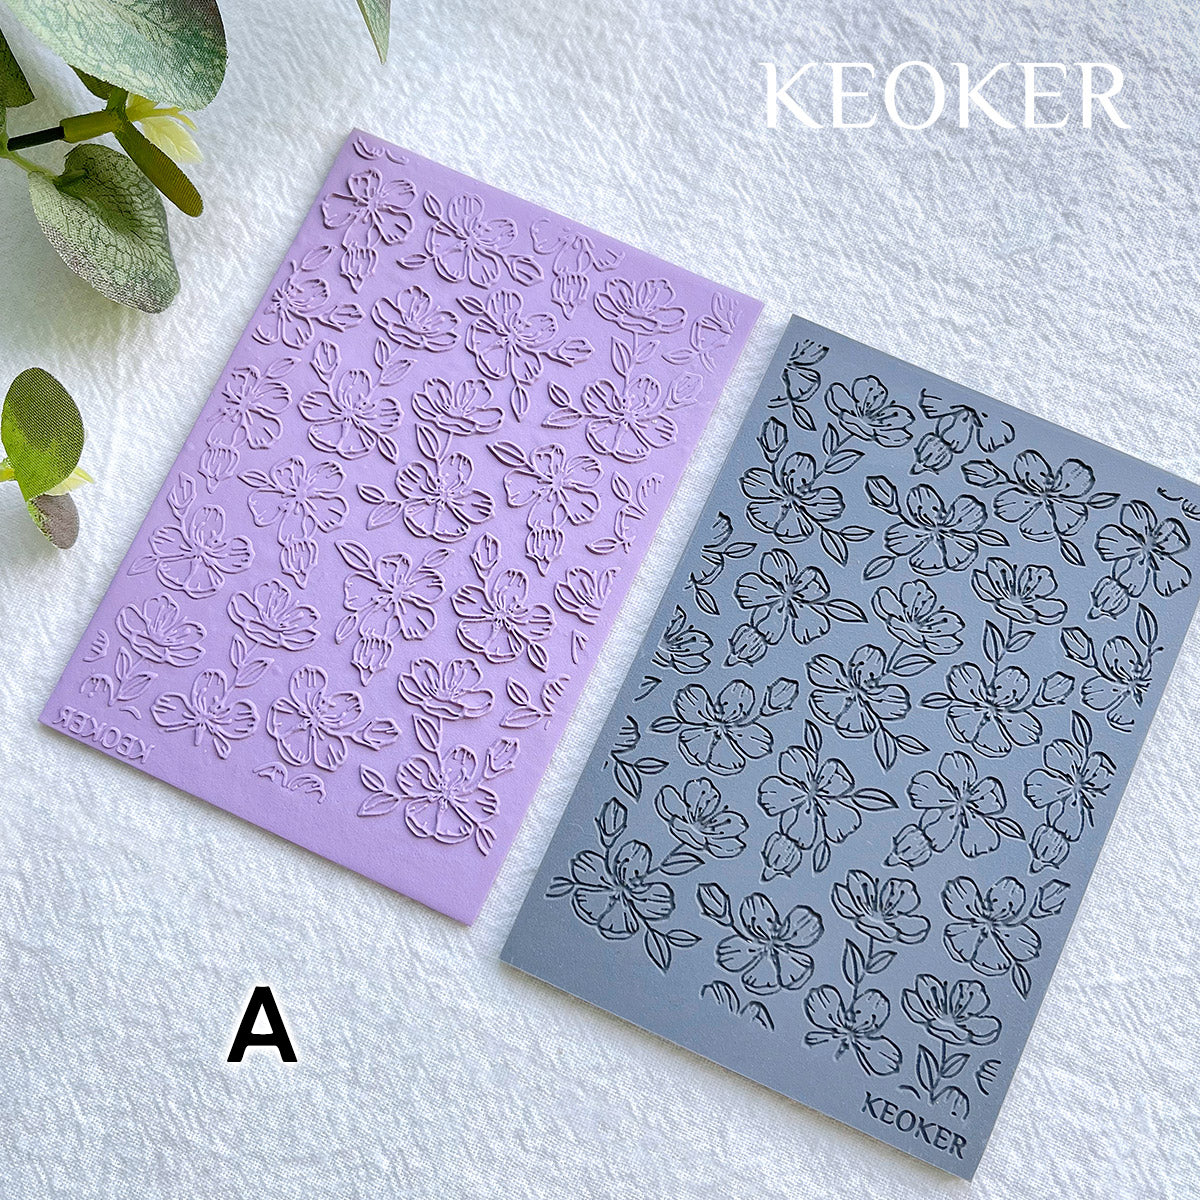 KEOKER Polymer Clay Texture Roller (Sandpaper Texture)